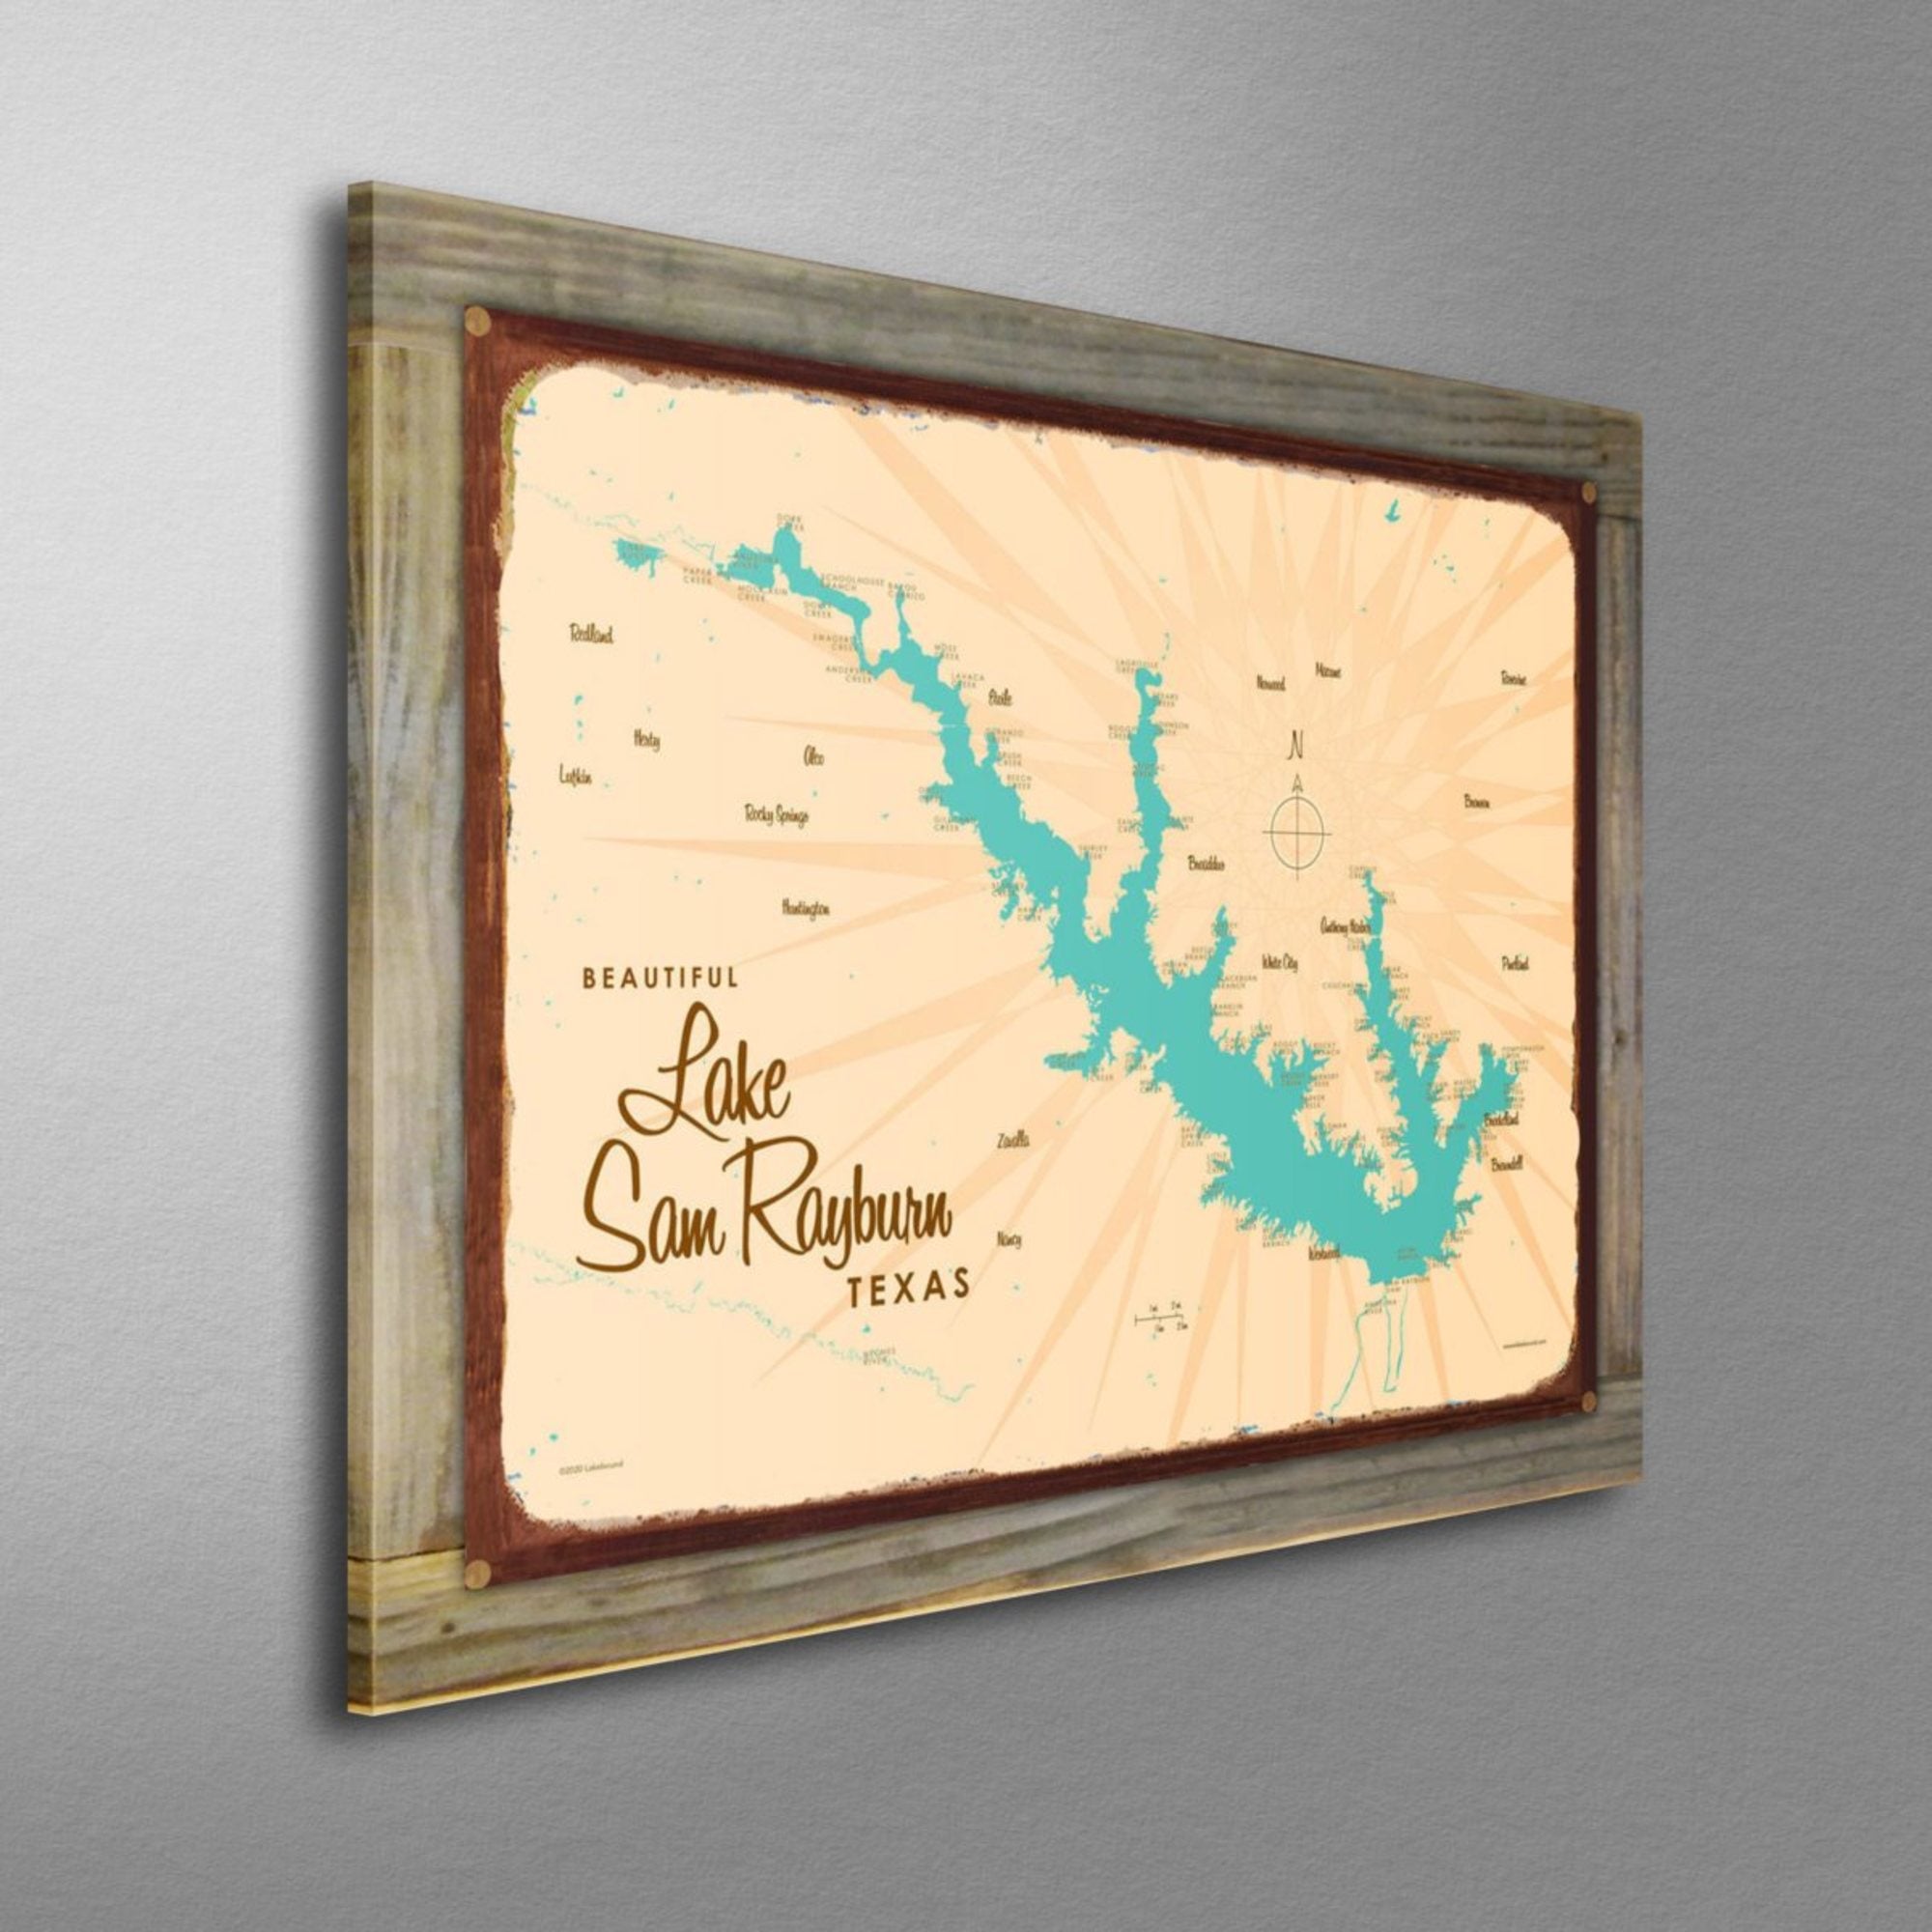 Lake Sam Rayburn Texas, Wood-Mounted Rustic Metal Sign Map Art